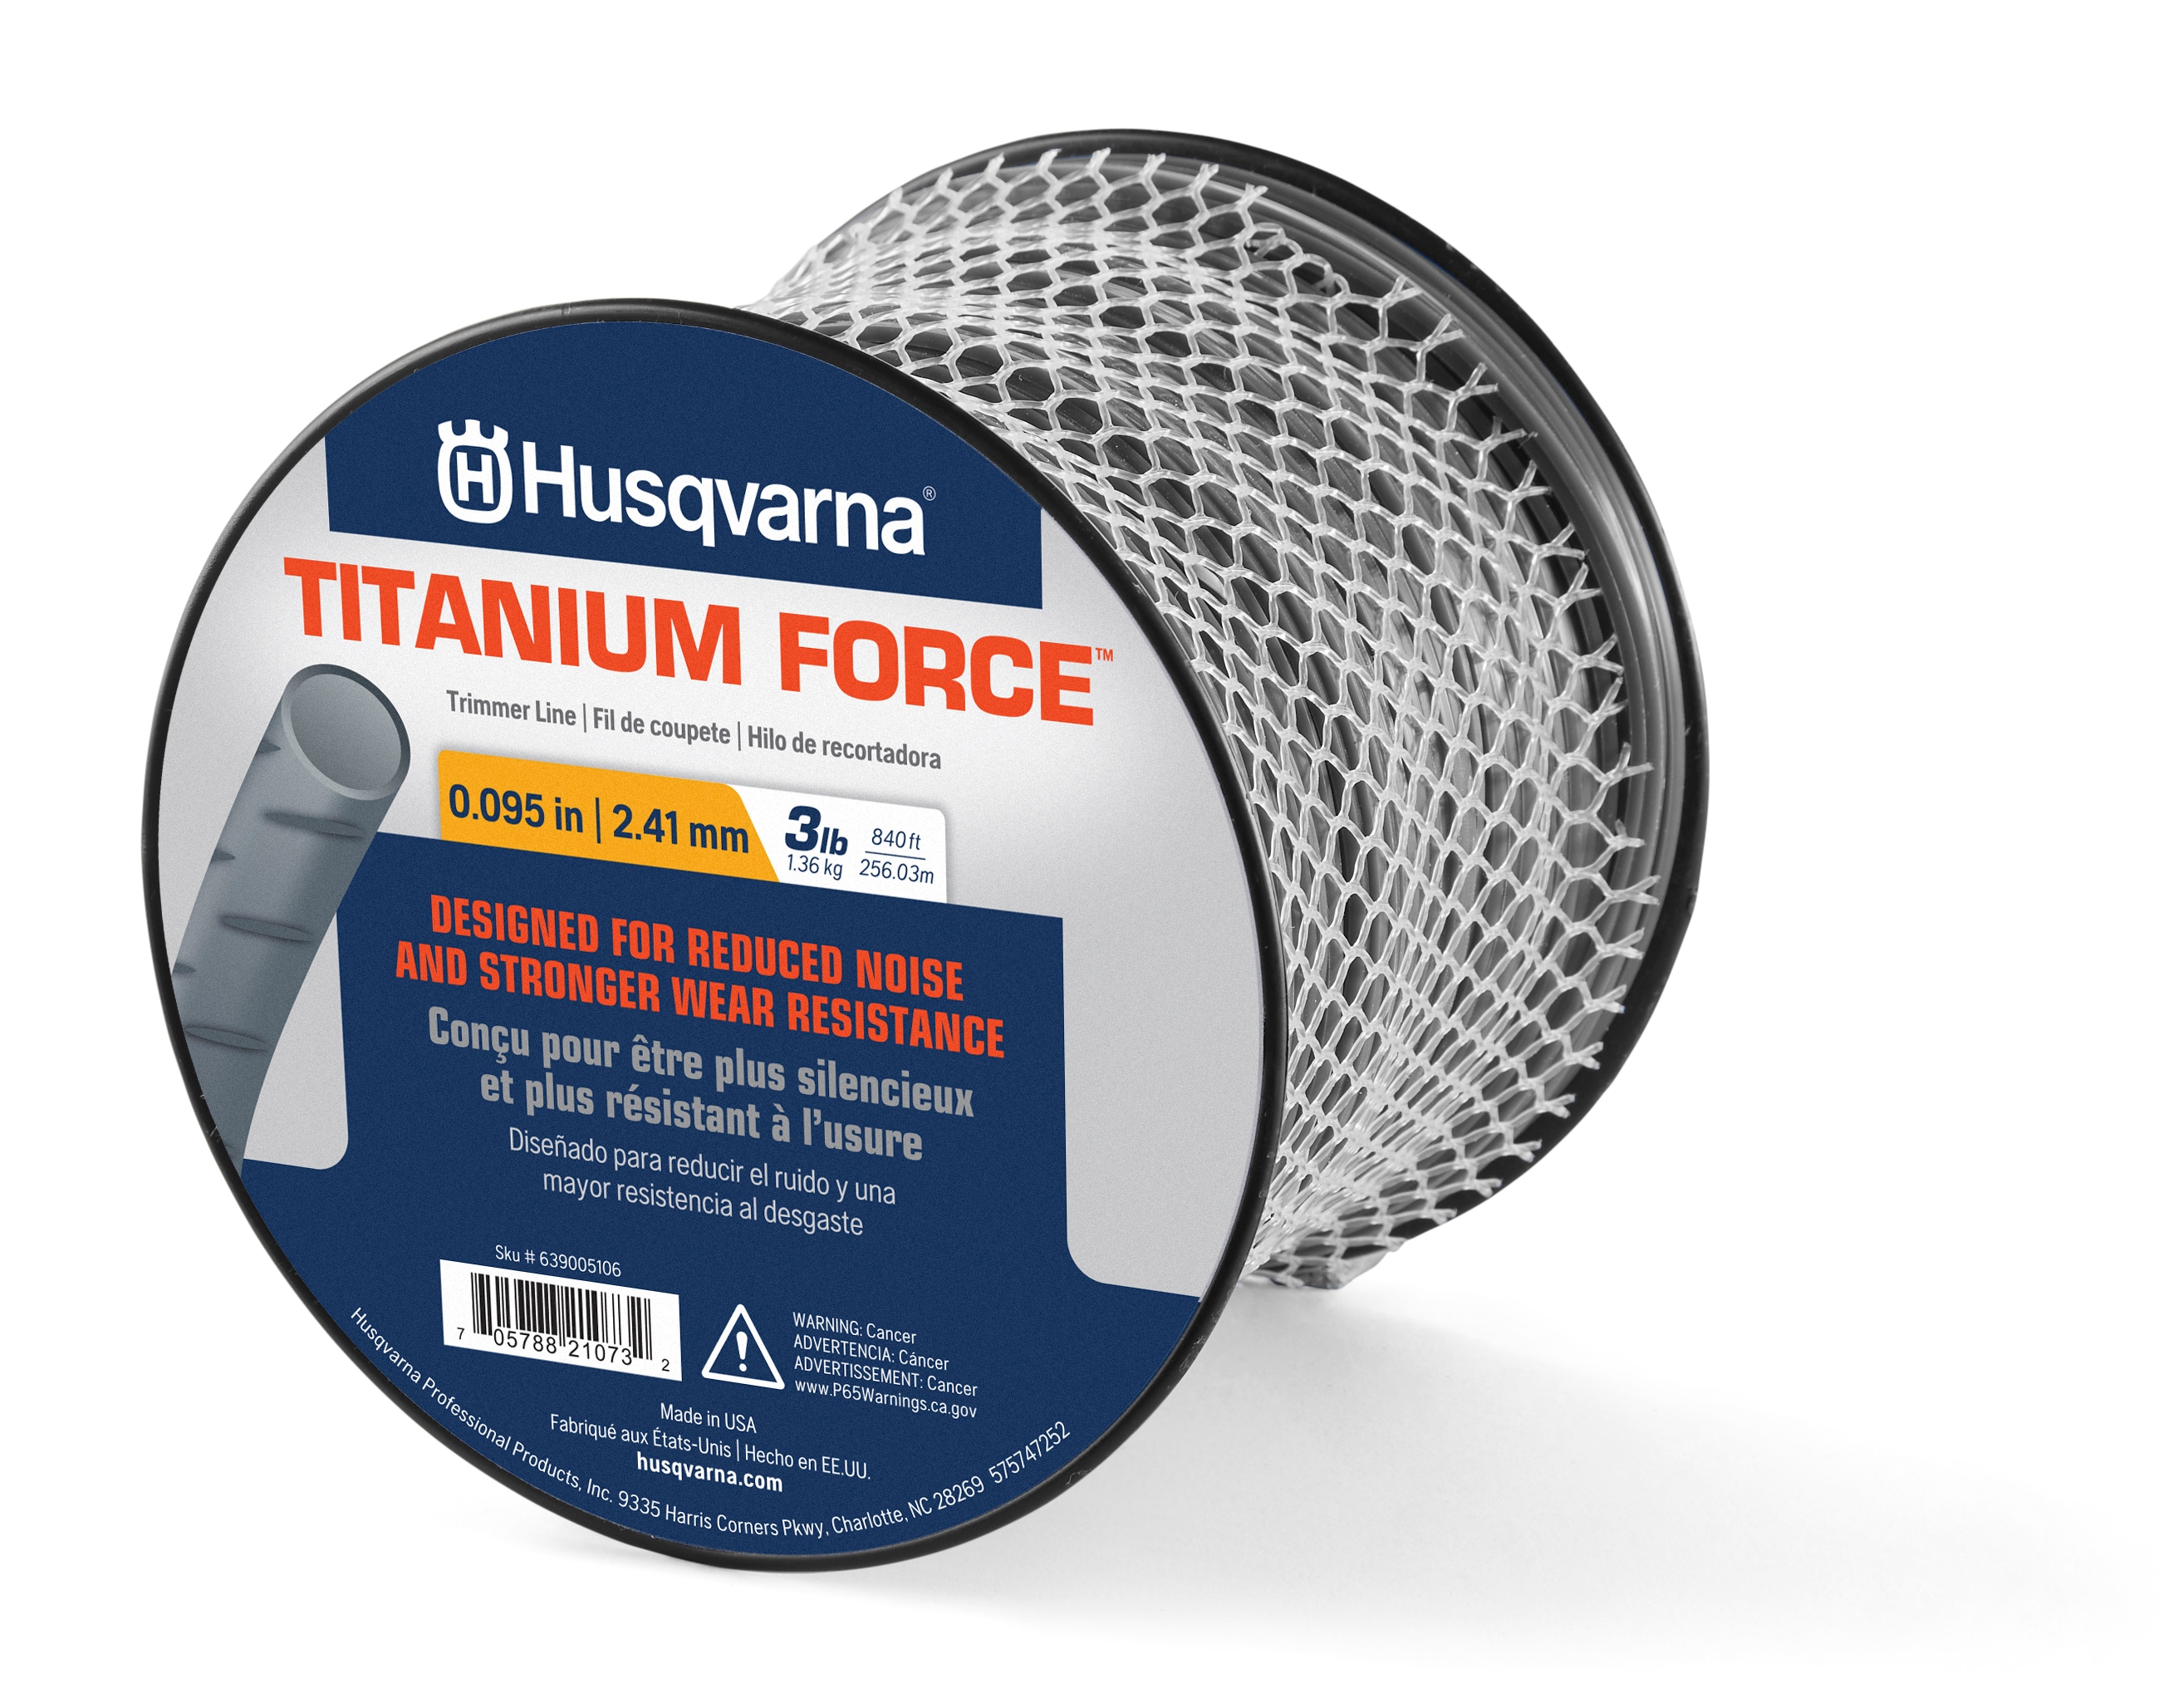 Husqvarna Titanium Force 0.095-in x 840-ft Spooled Trimmer Line